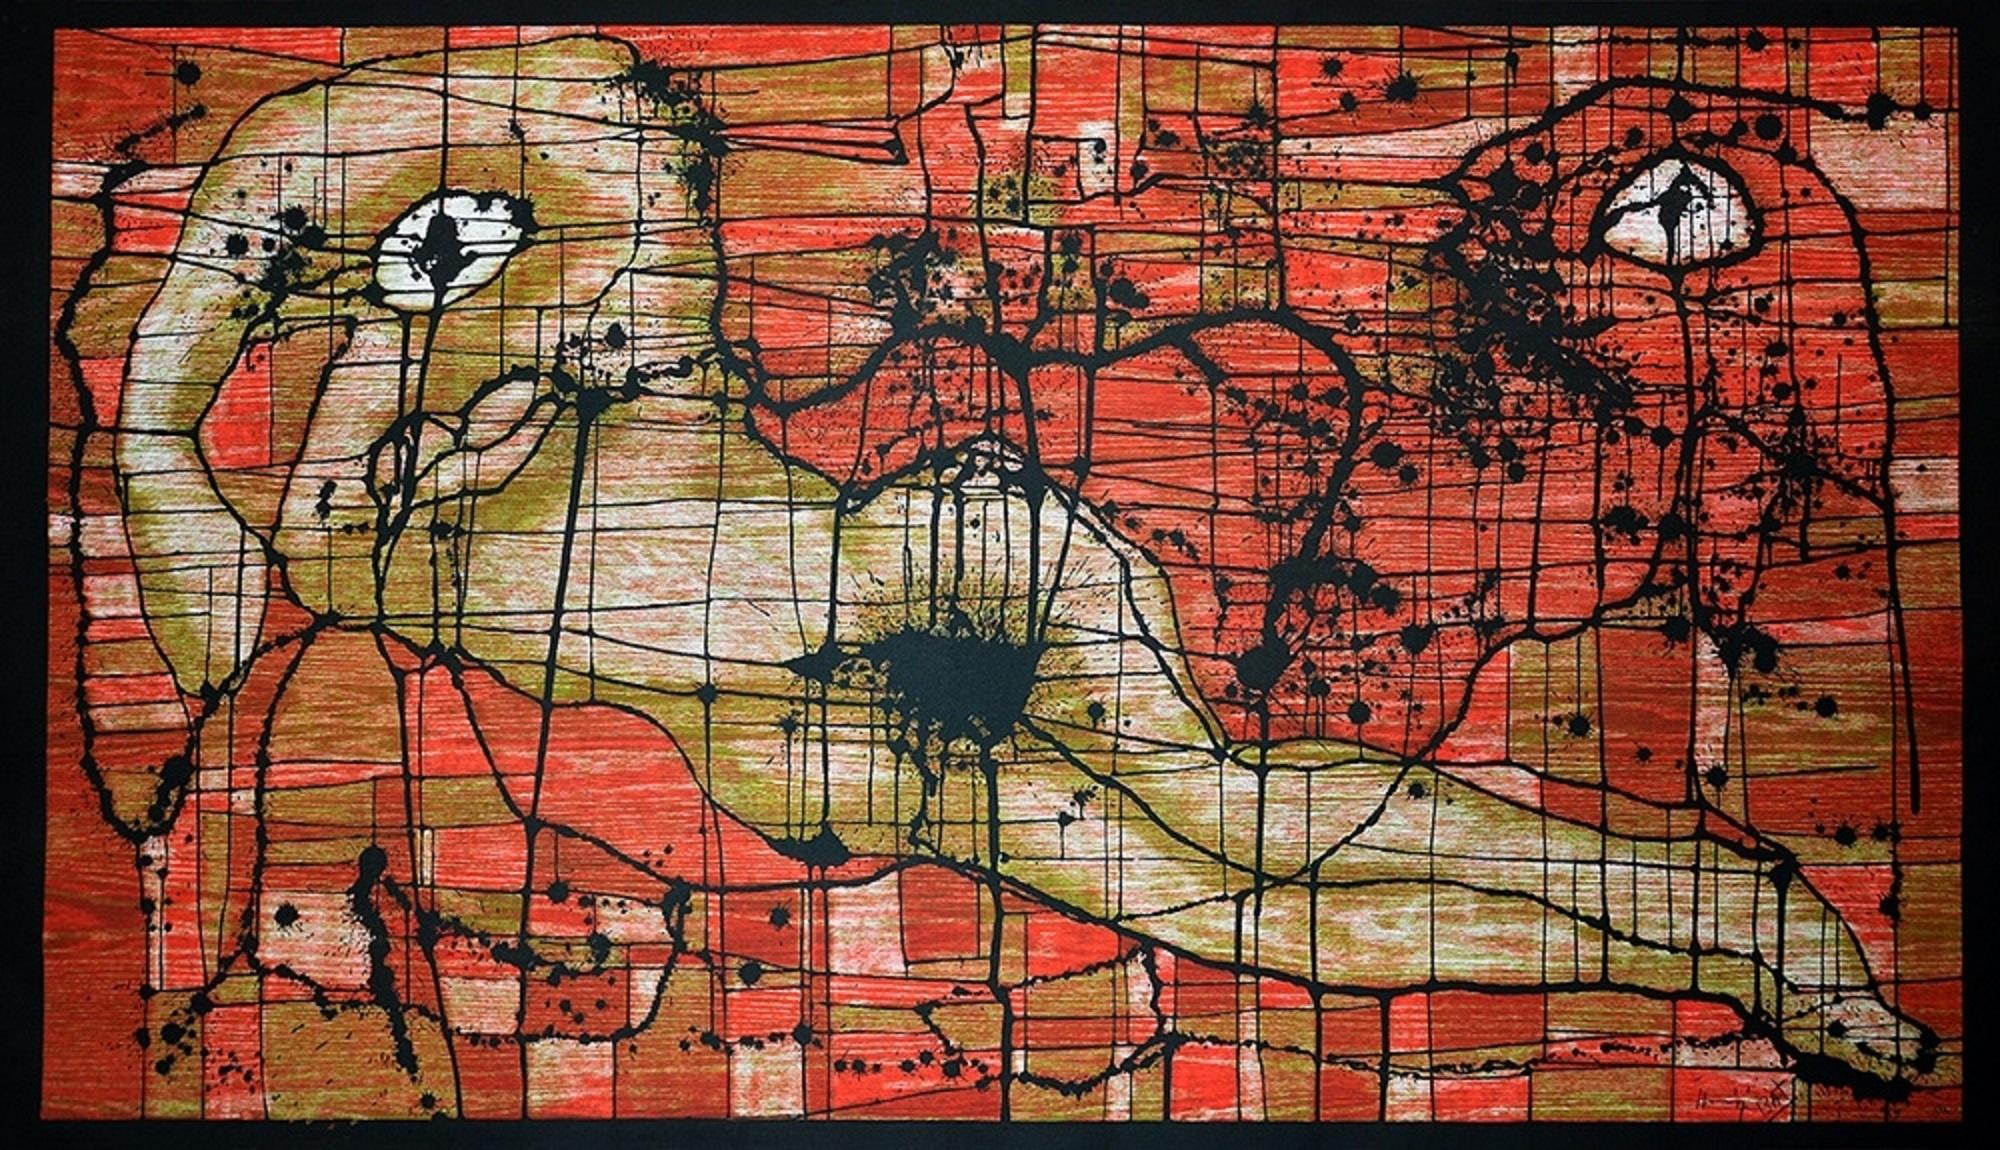 Nude Print Sergio Hernández - Sergio Hernandez, « La Maja », 2017, gravure sur bois 87 x 42 pouces